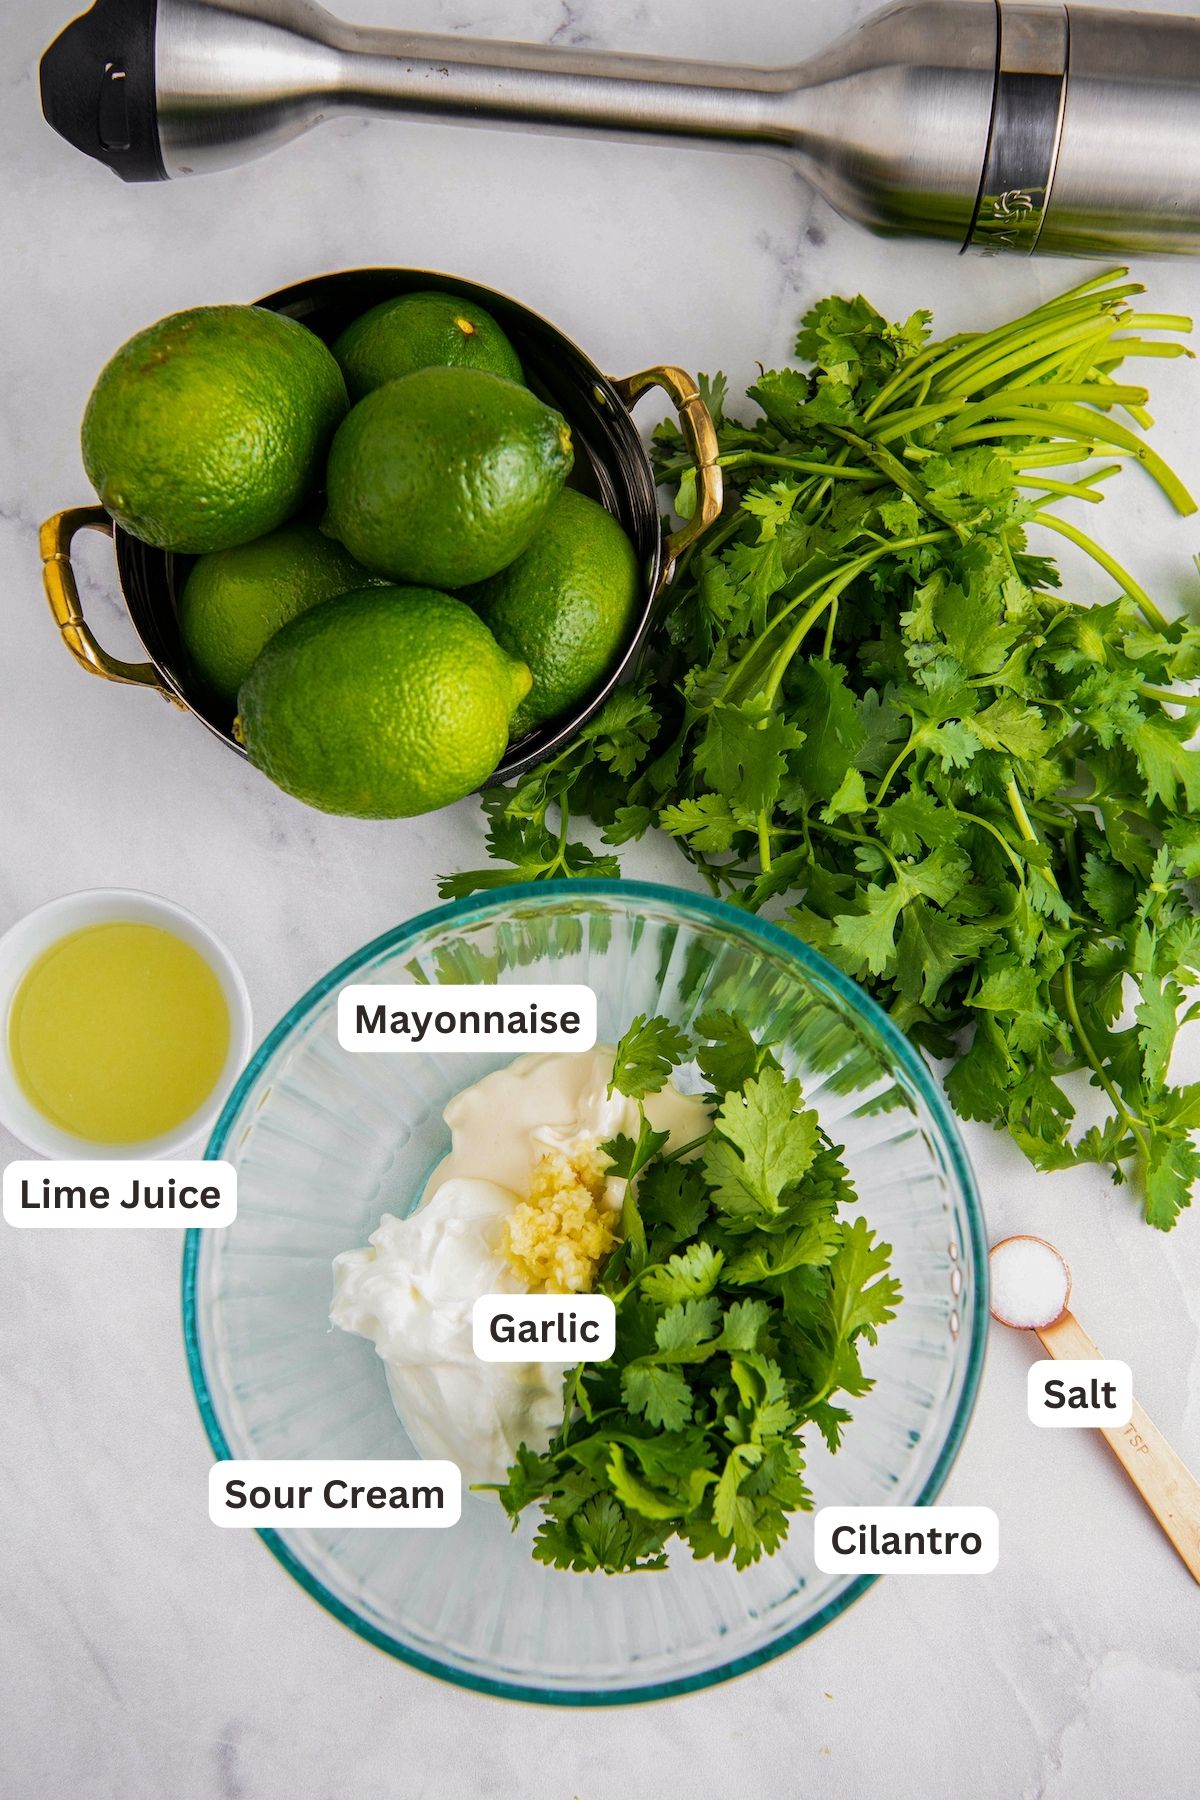 Ingredients to make Cilantro Lime Crema.